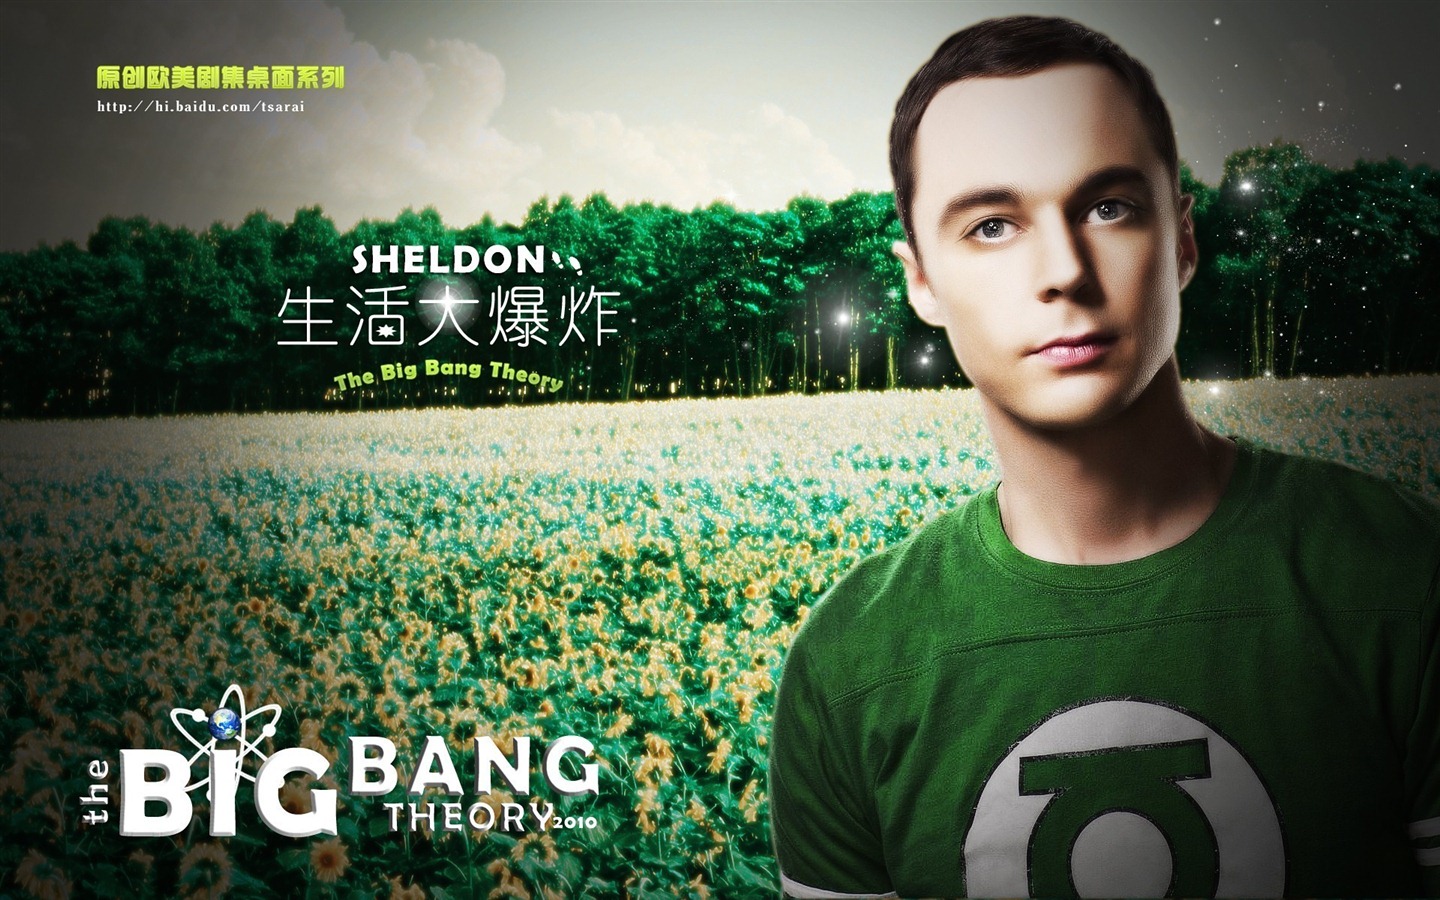 The Big Bang Theory ビッグバン理論TVシリーズHDの壁紙 #16 - 1440x900